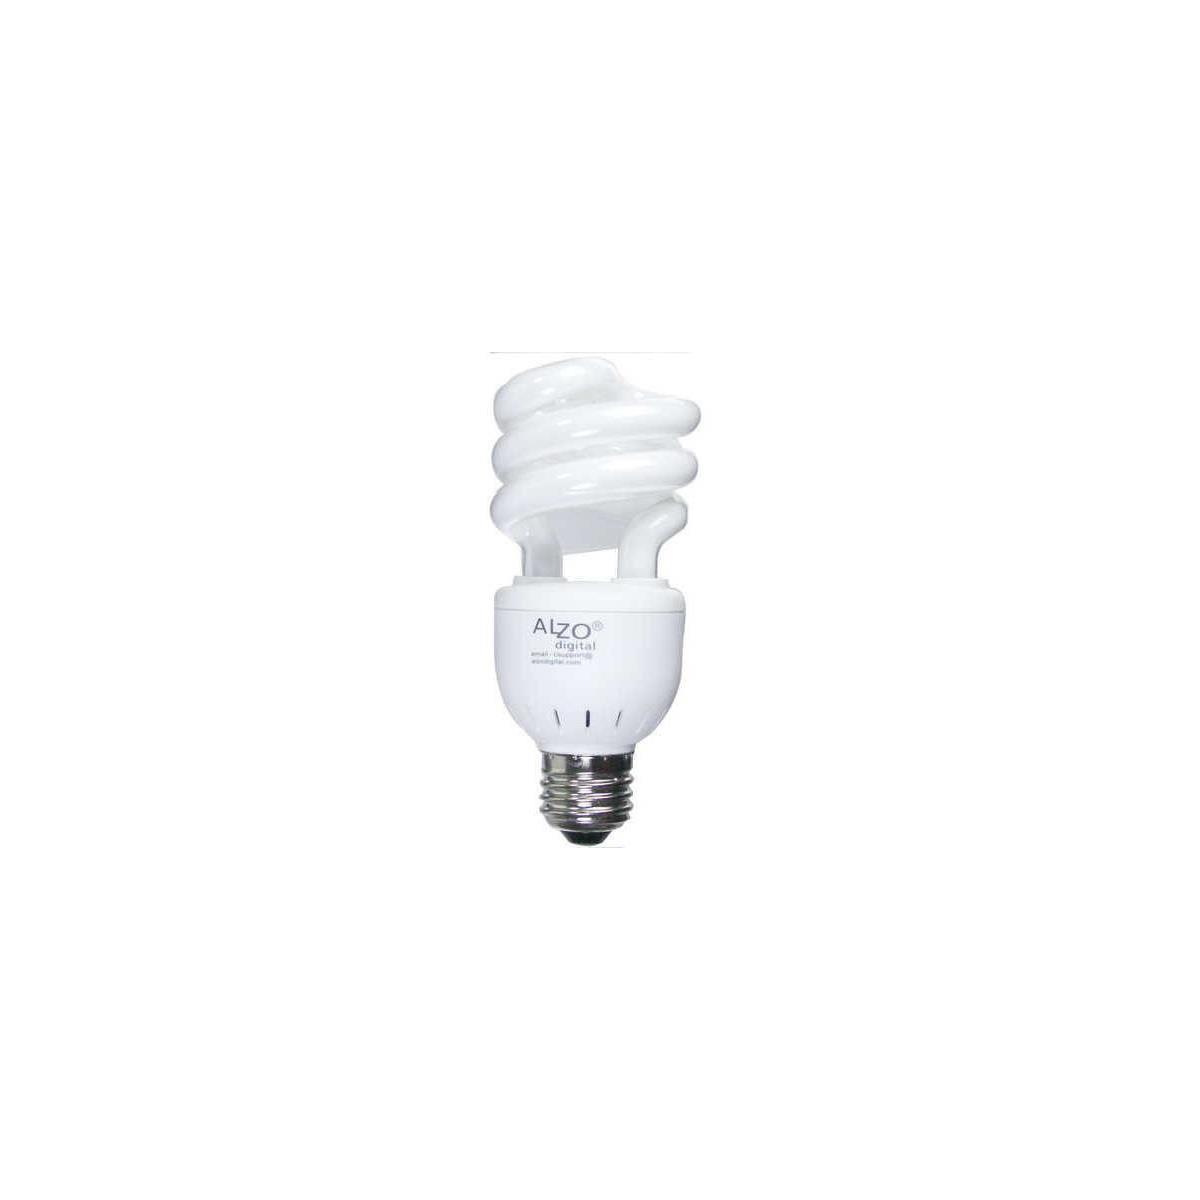 Image of Alzo Digital 15W 120V Joyous Light CFL Bulb